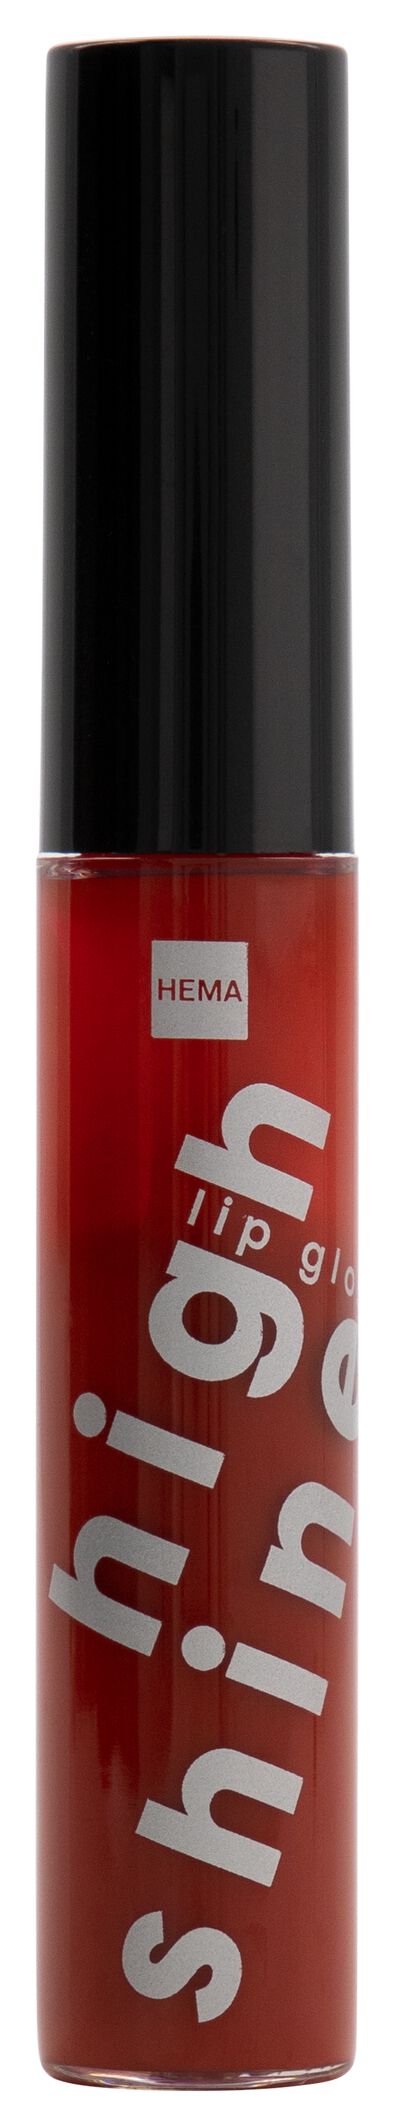 hoogglanzende lipgloss red - 11230262 - HEMA